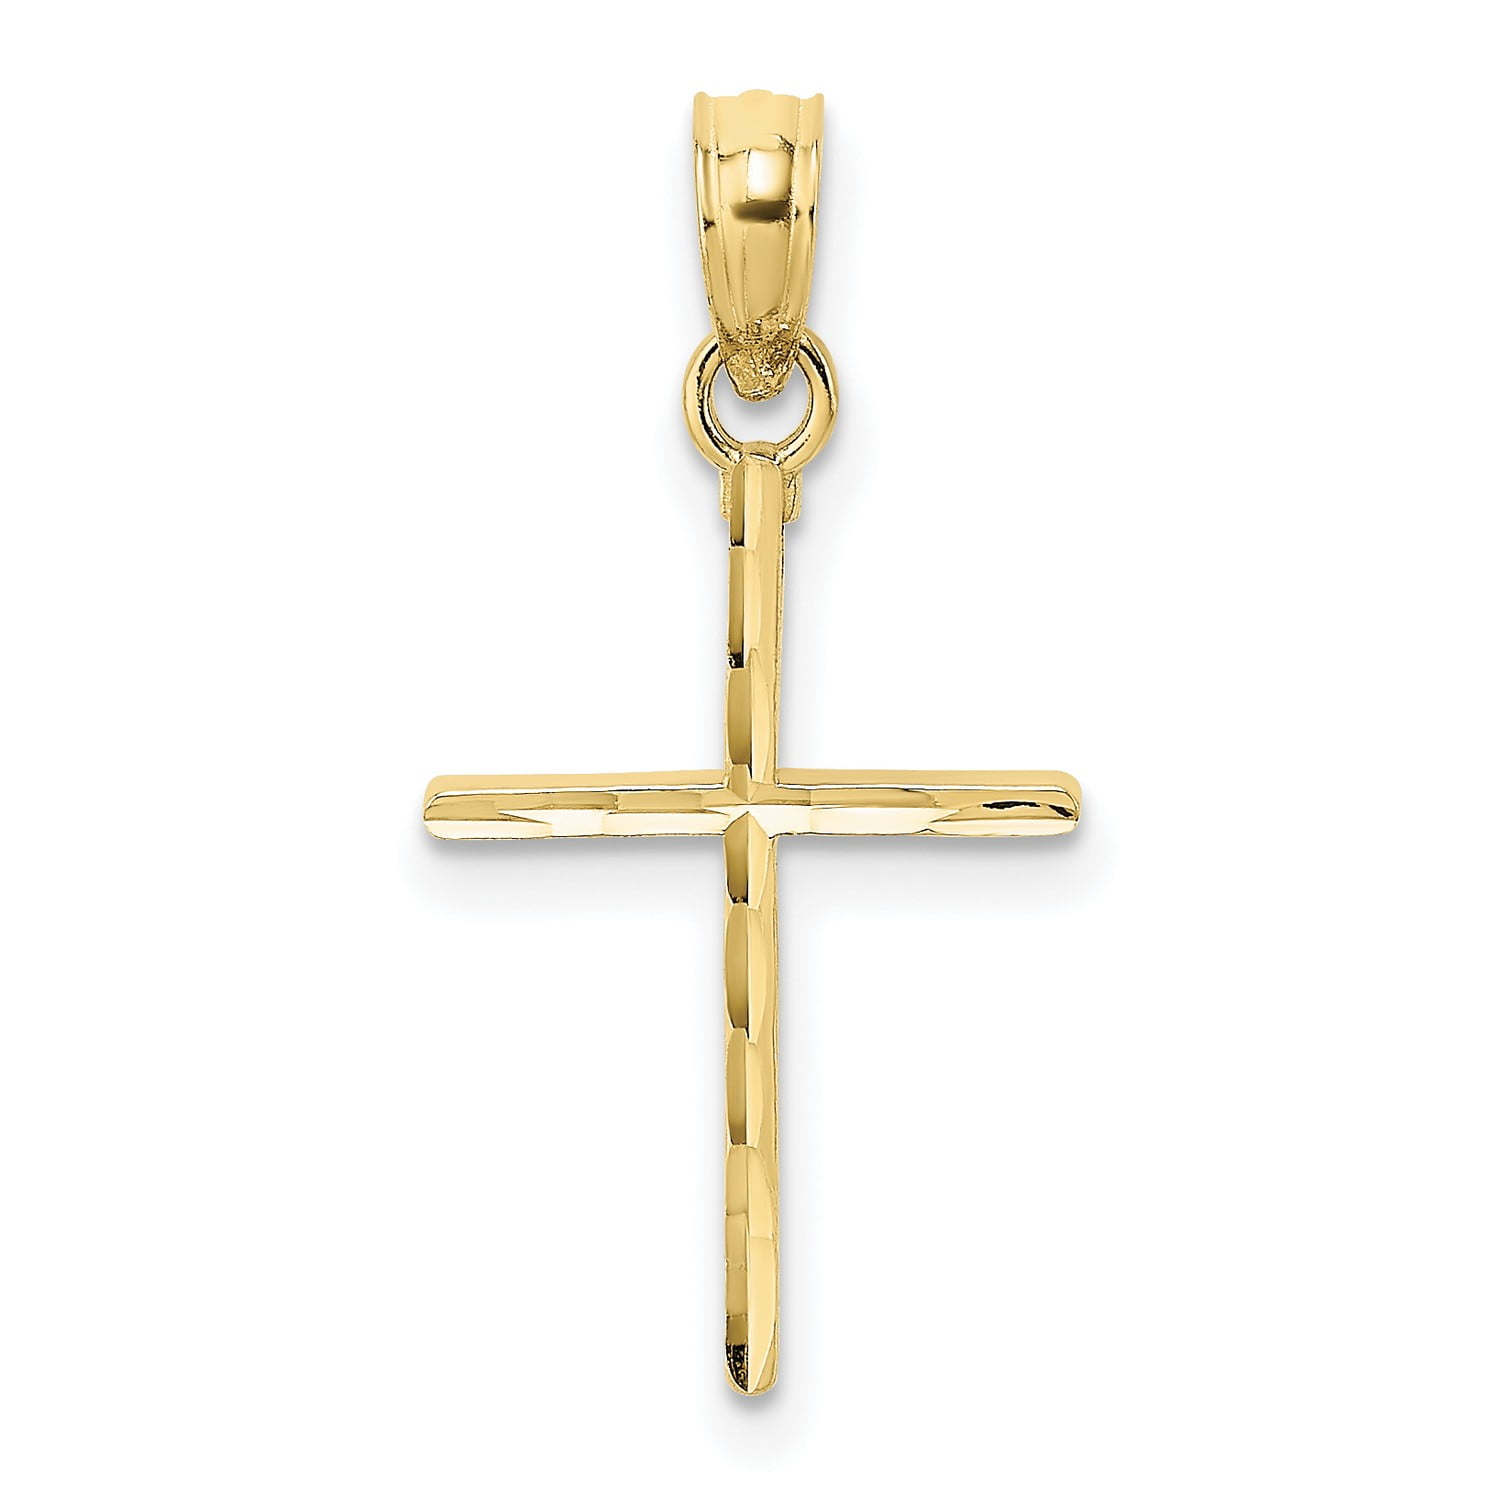 10k Yellow Gold Polished Cross Charm Pendant 19mmx9mm